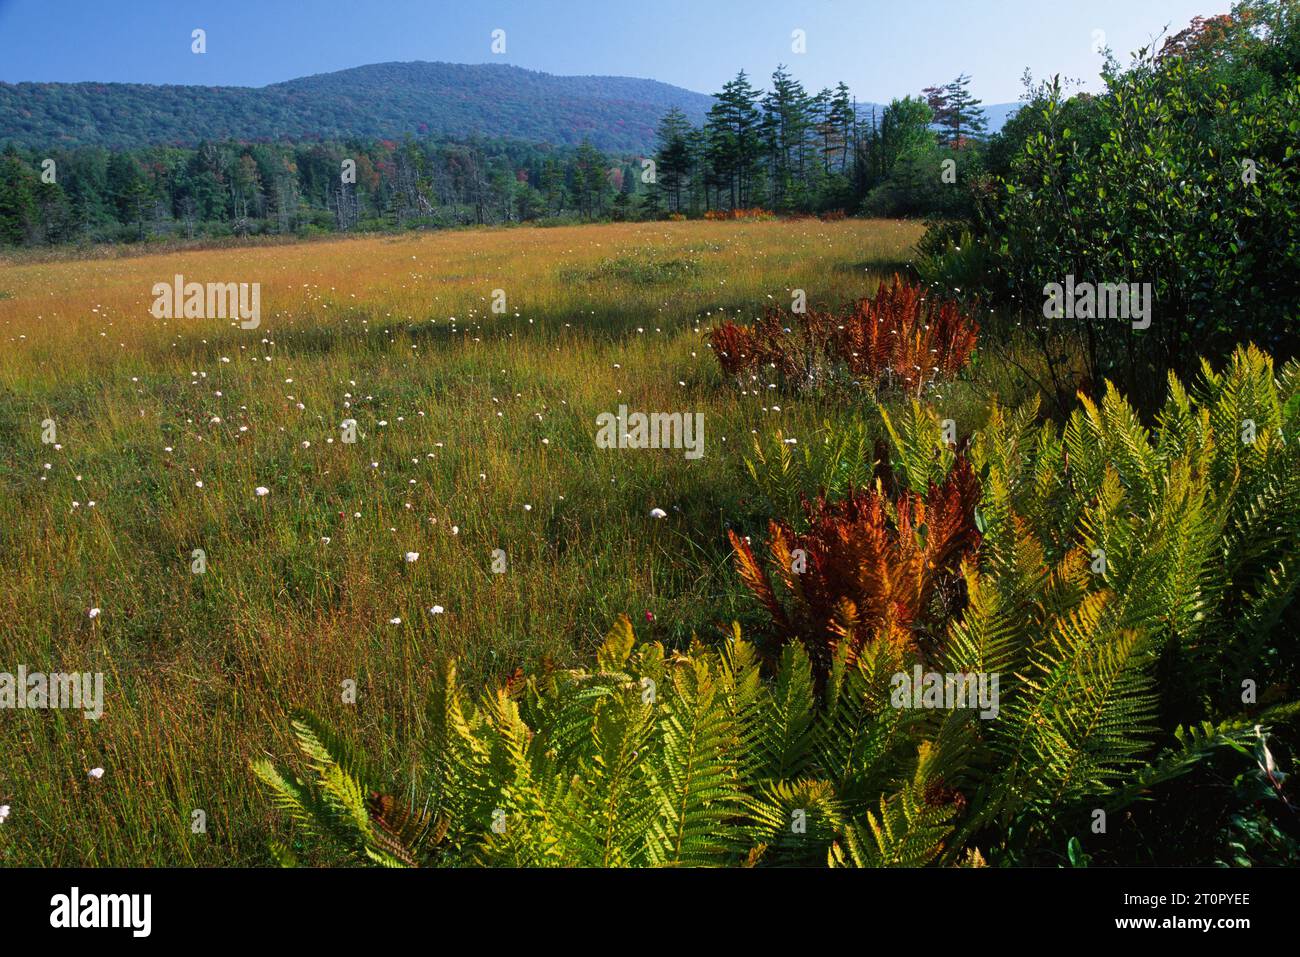 Round Glade, Highlands Scenic Highway, Cranberry Glades Botanical Area, Monongahela National Forest, West Virginia Stock Photo